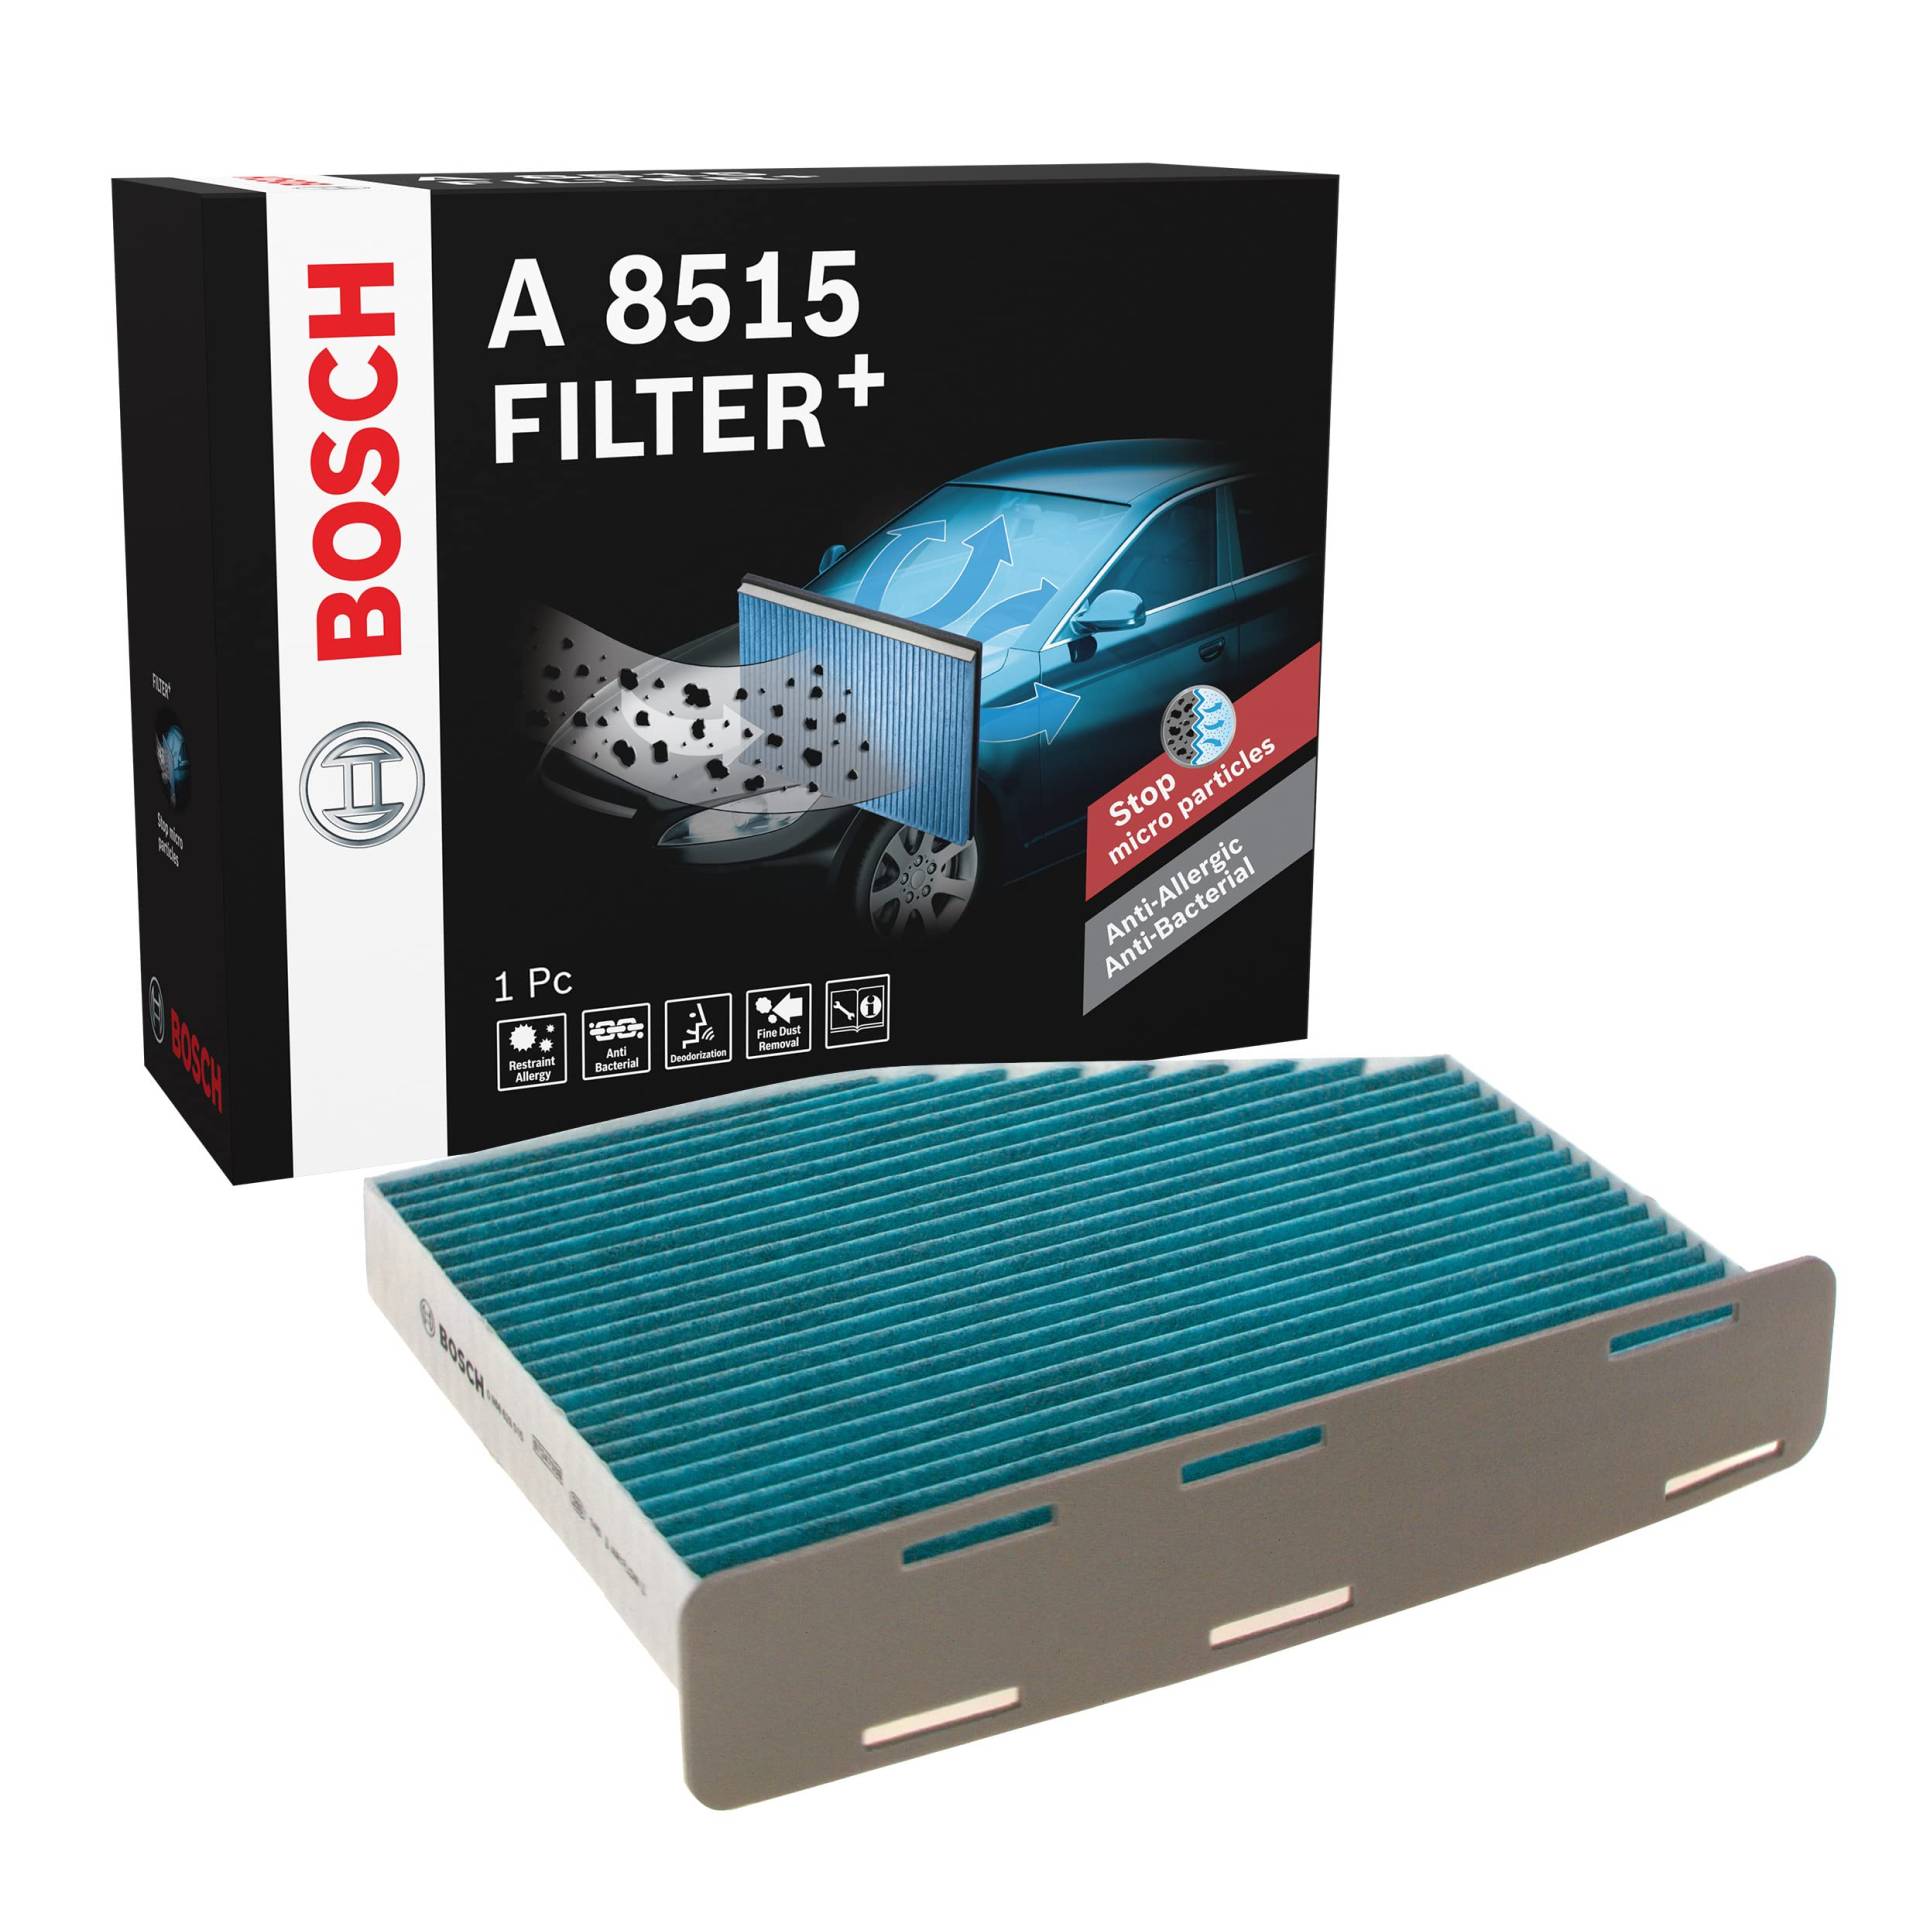 Bosch A8515 - Innenraumfilter Filter+ von Bosch Automotive